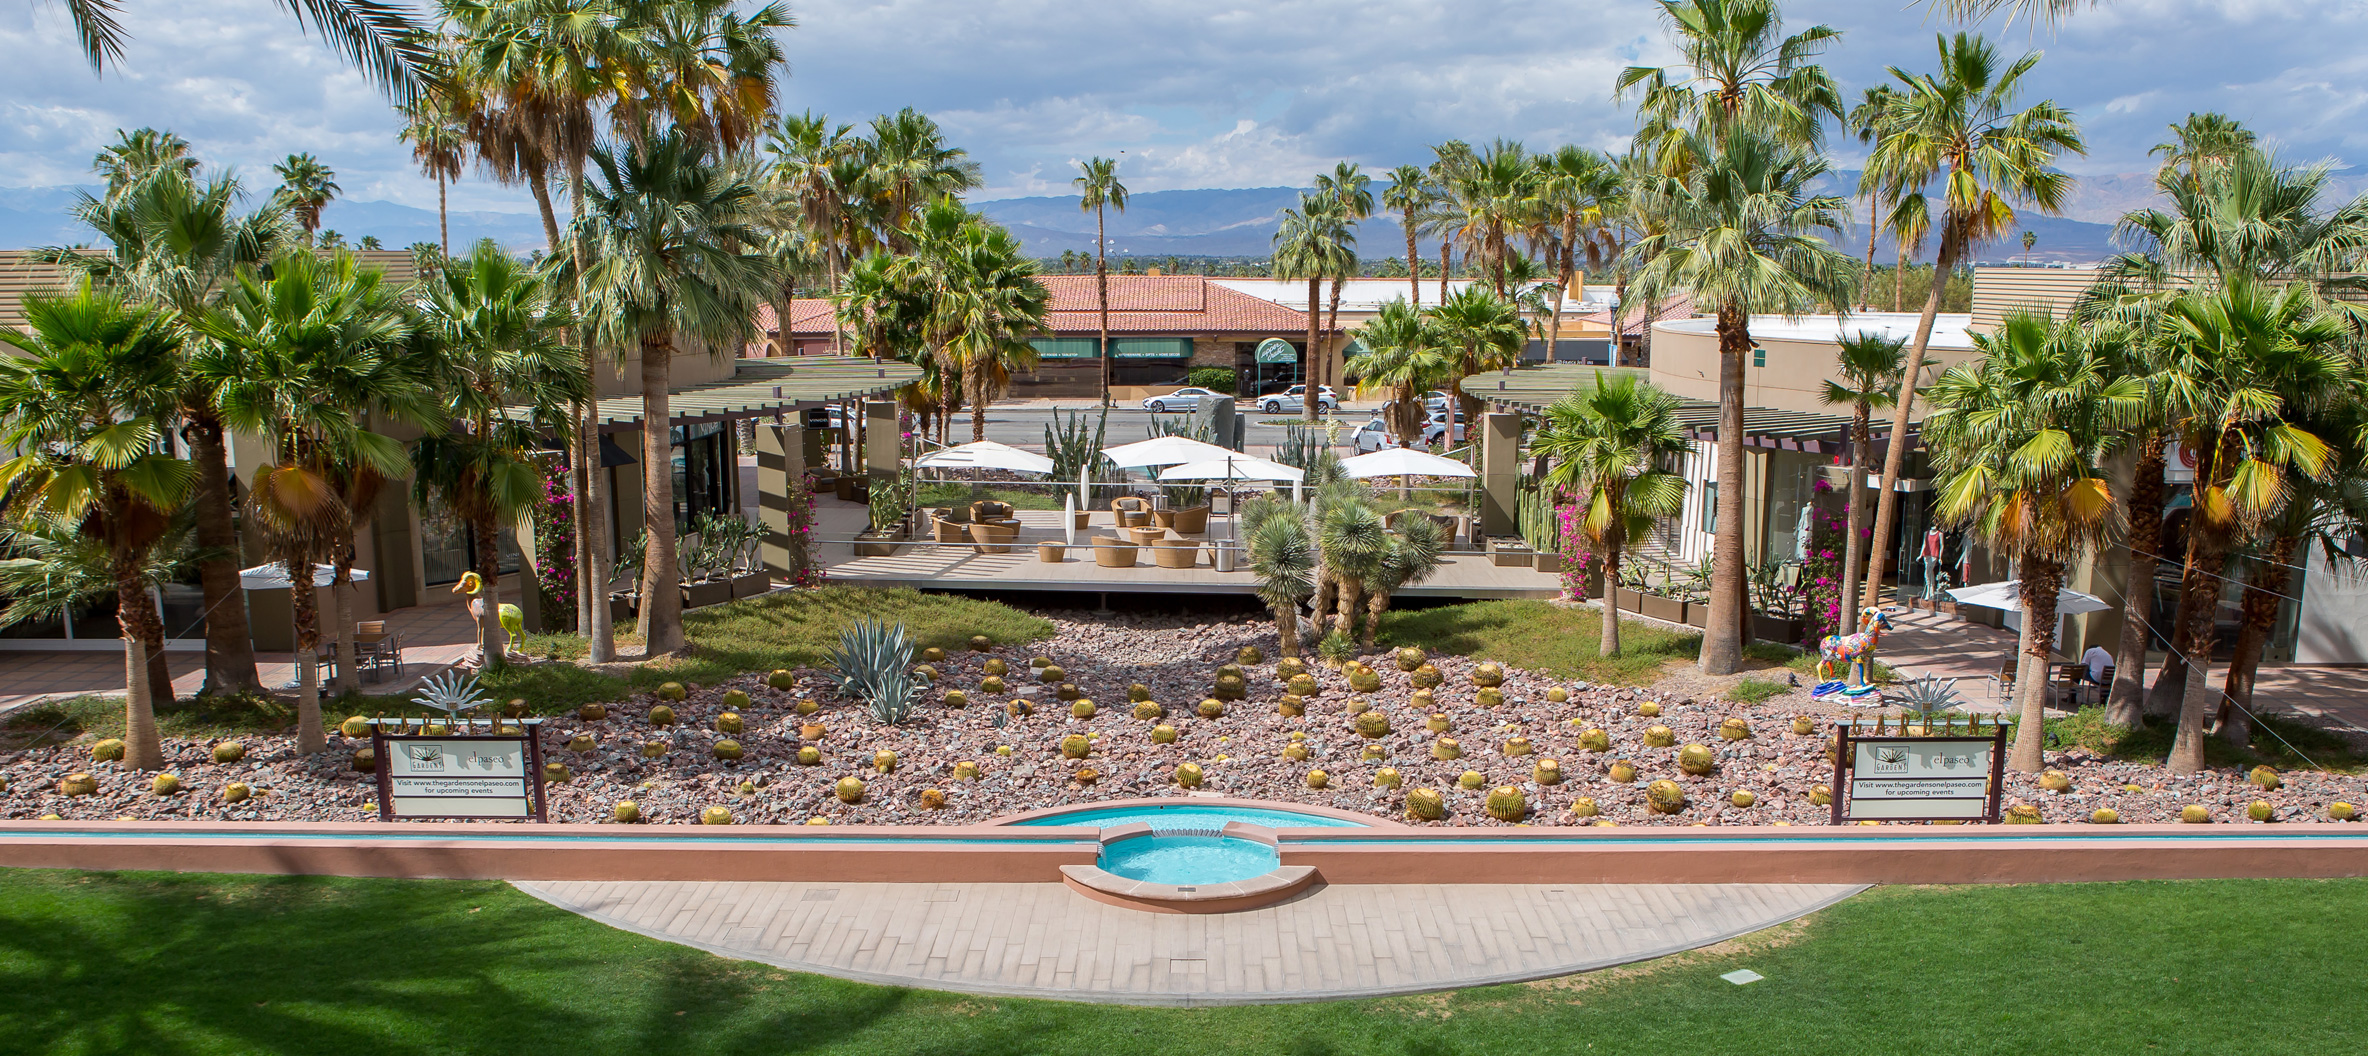 The Gardens on El Paseo - Palm Desert Shopping Destinations